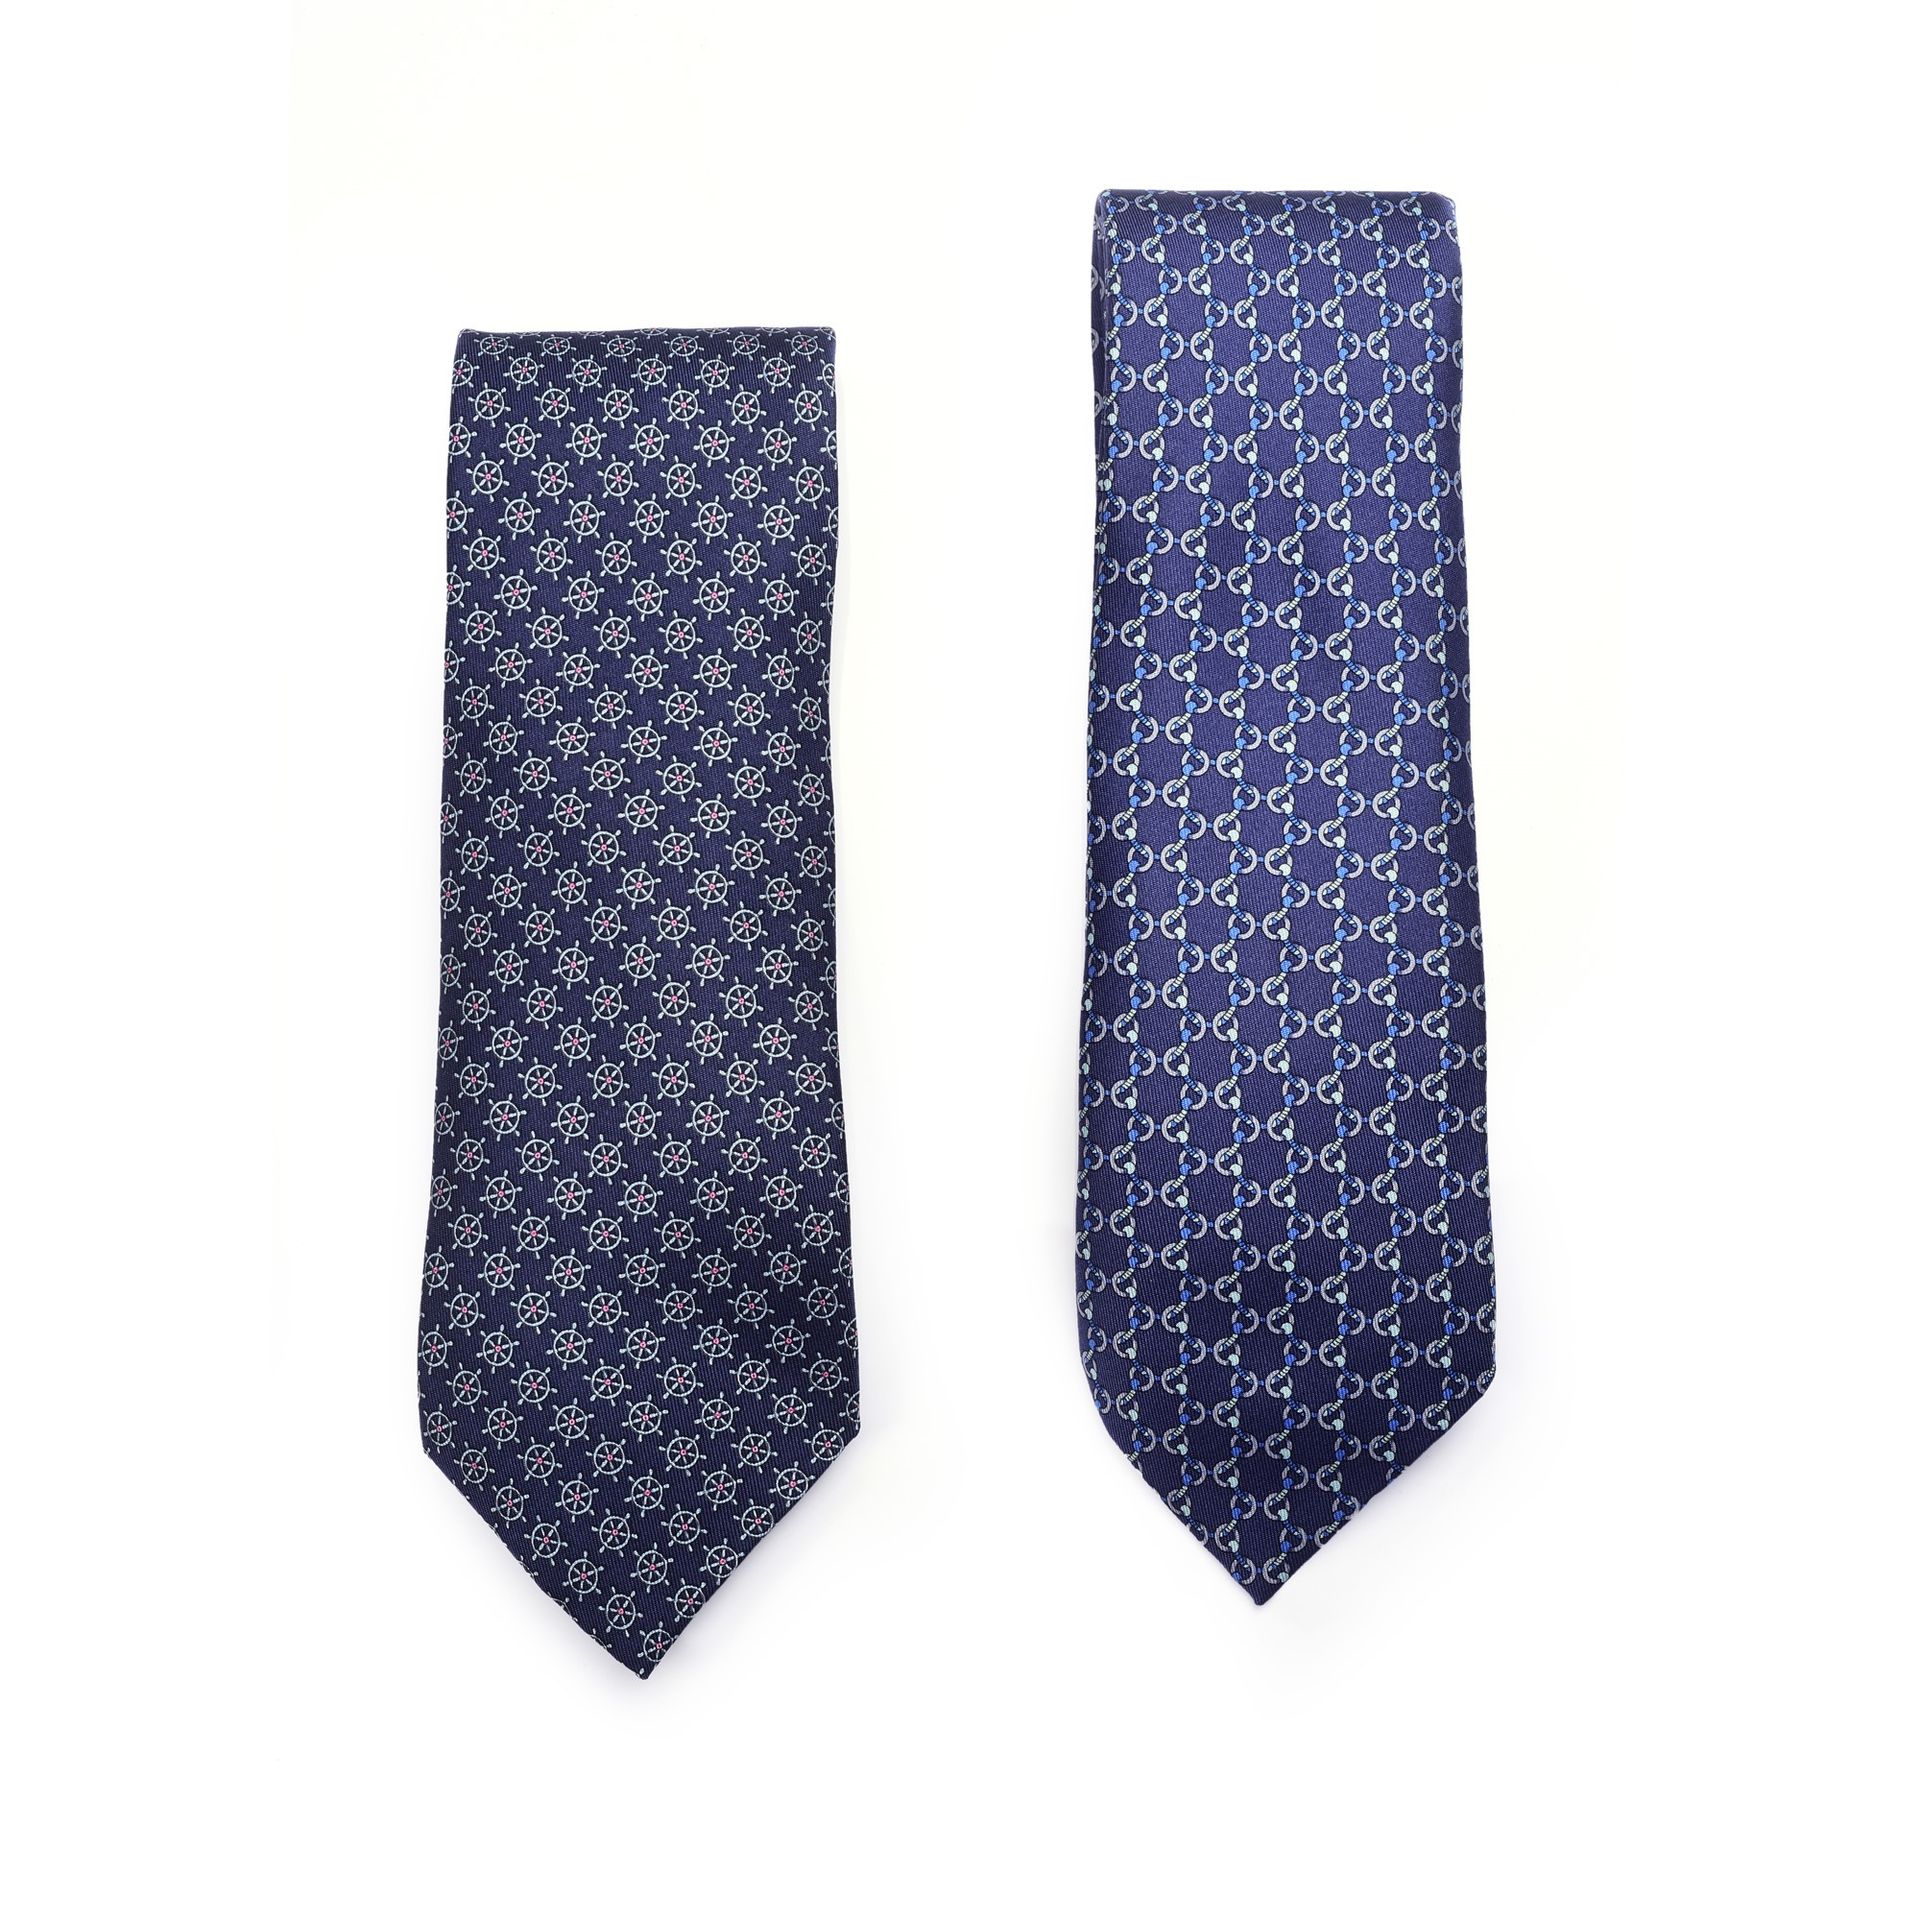 Null 
乐透由两条爱马仕领带组成，蓝色的seta，带着幻想。




9厘米长




本拍品由两条爱马仕的蓝色幻想丝领带组成。